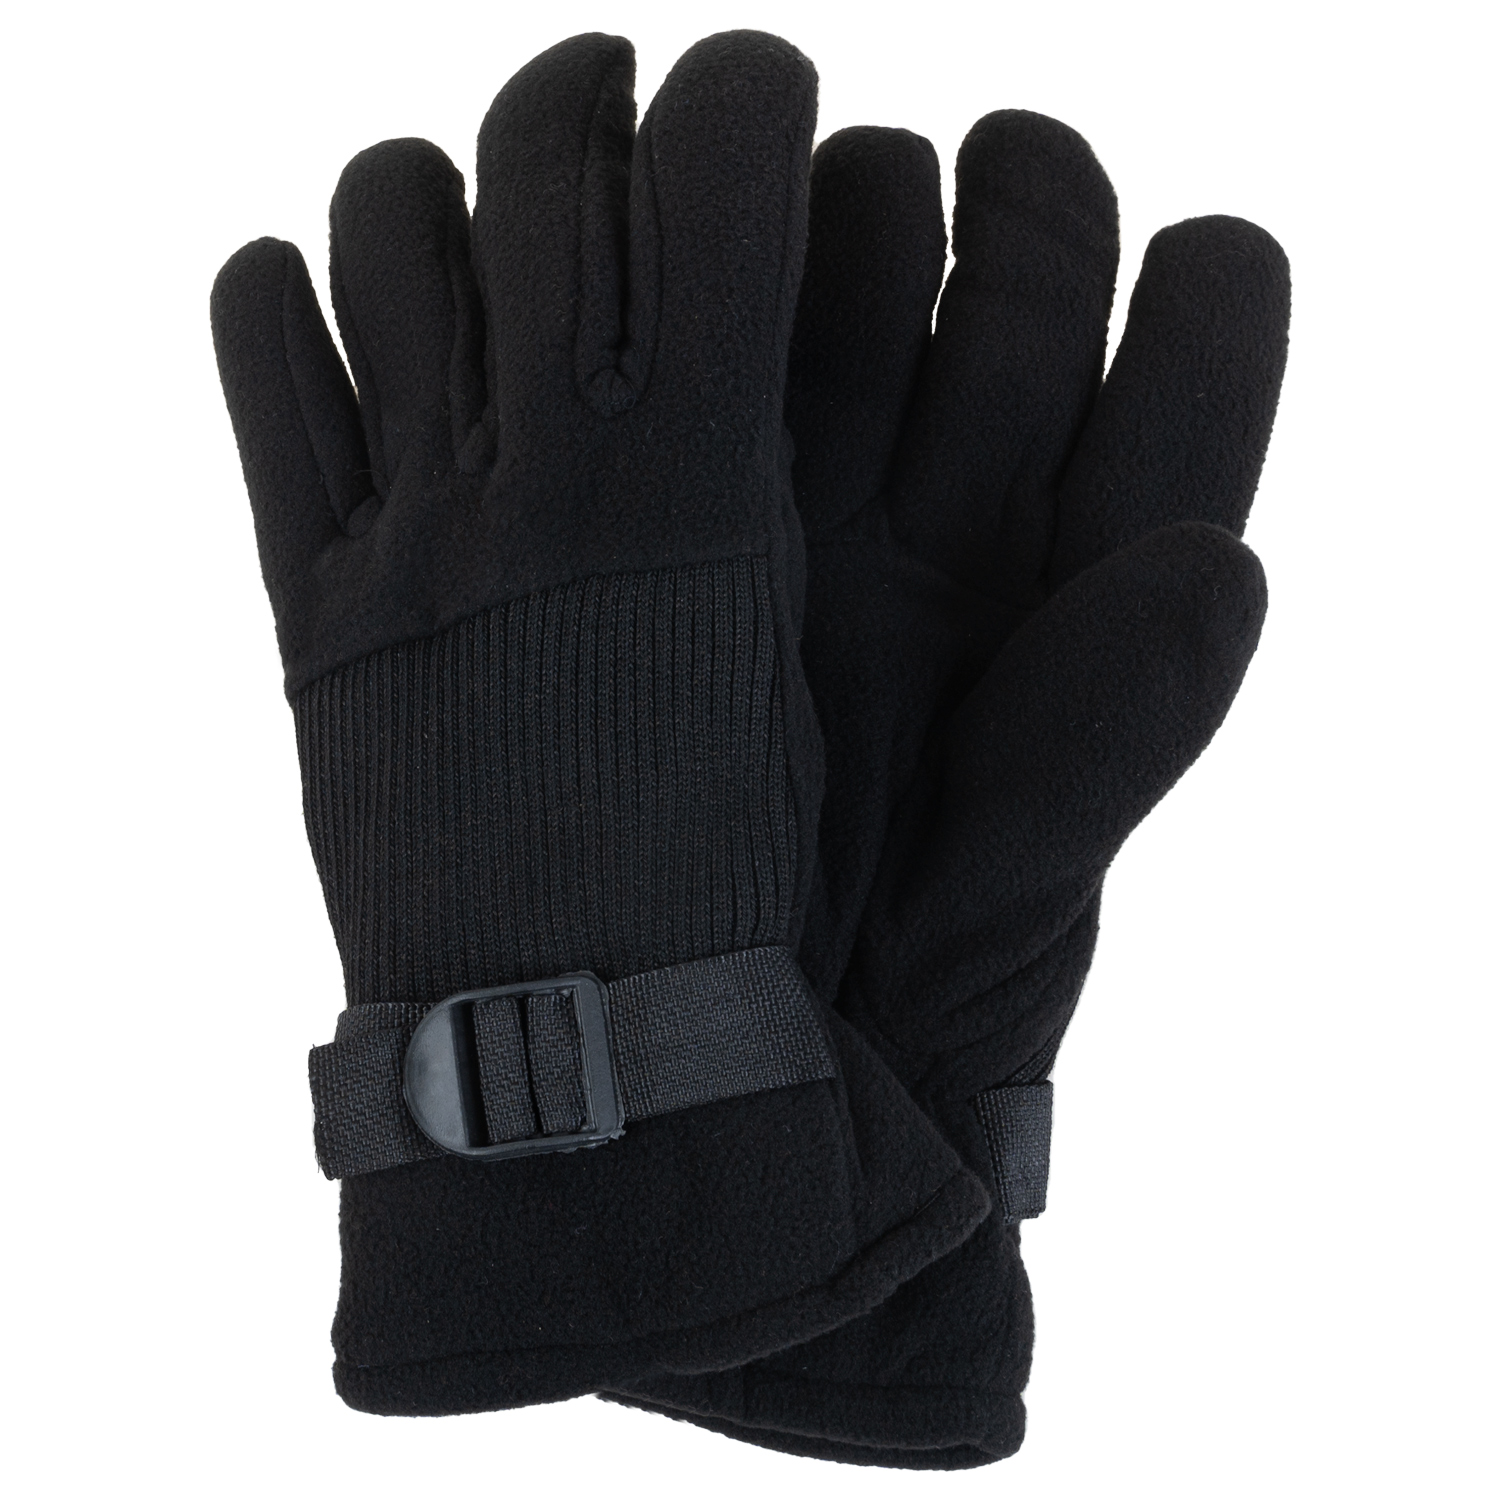 Fleece gloves with adjustable wrist leash